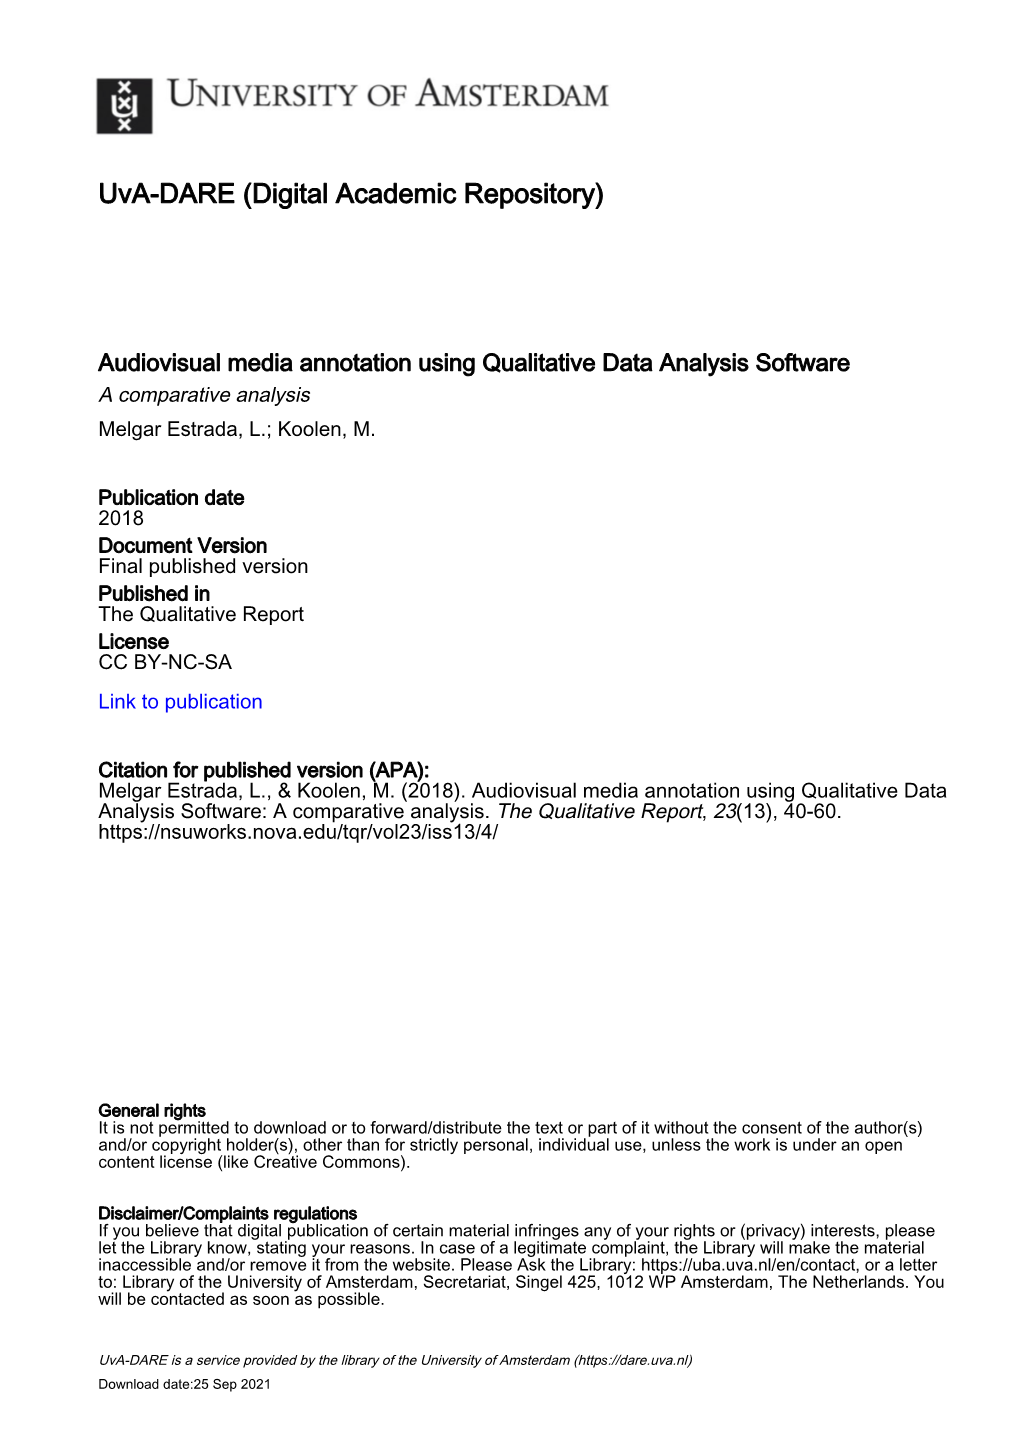 Audiovisual Media Annotation Using Qualitative Data Analysis Software a Comparative Analysis Melgar Estrada, L.; Koolen, M